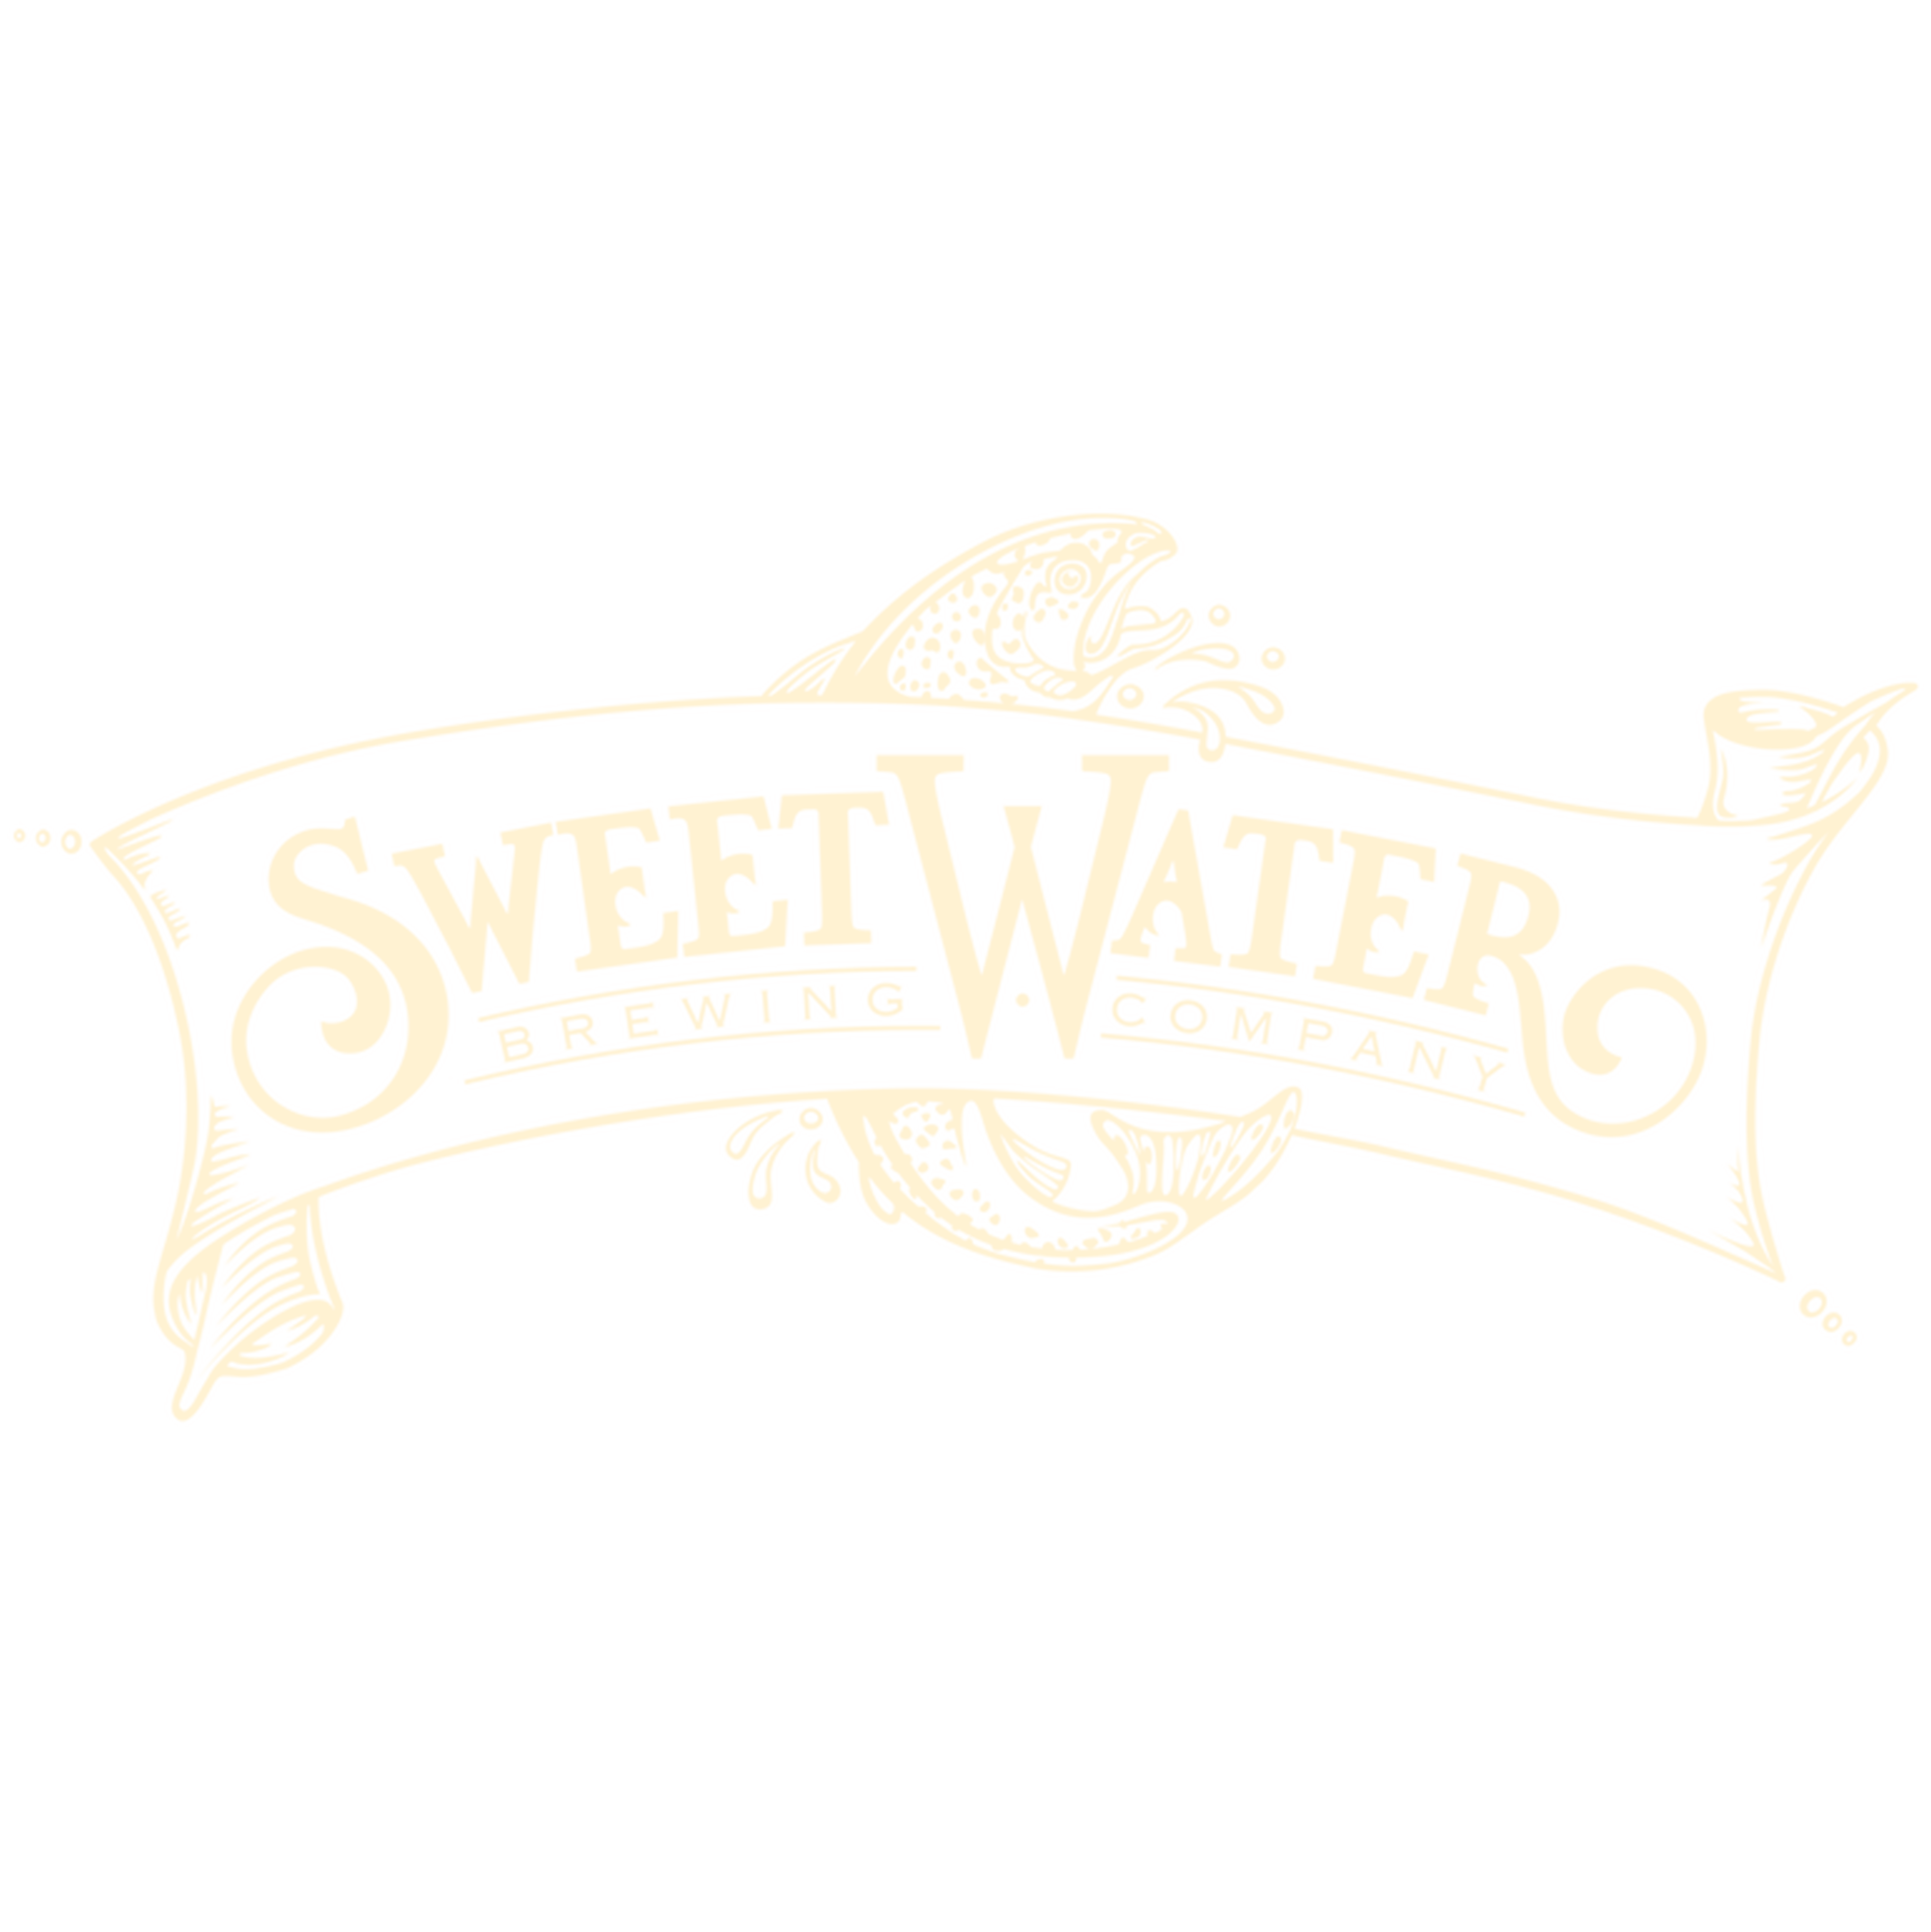 Sweetwater logo tan